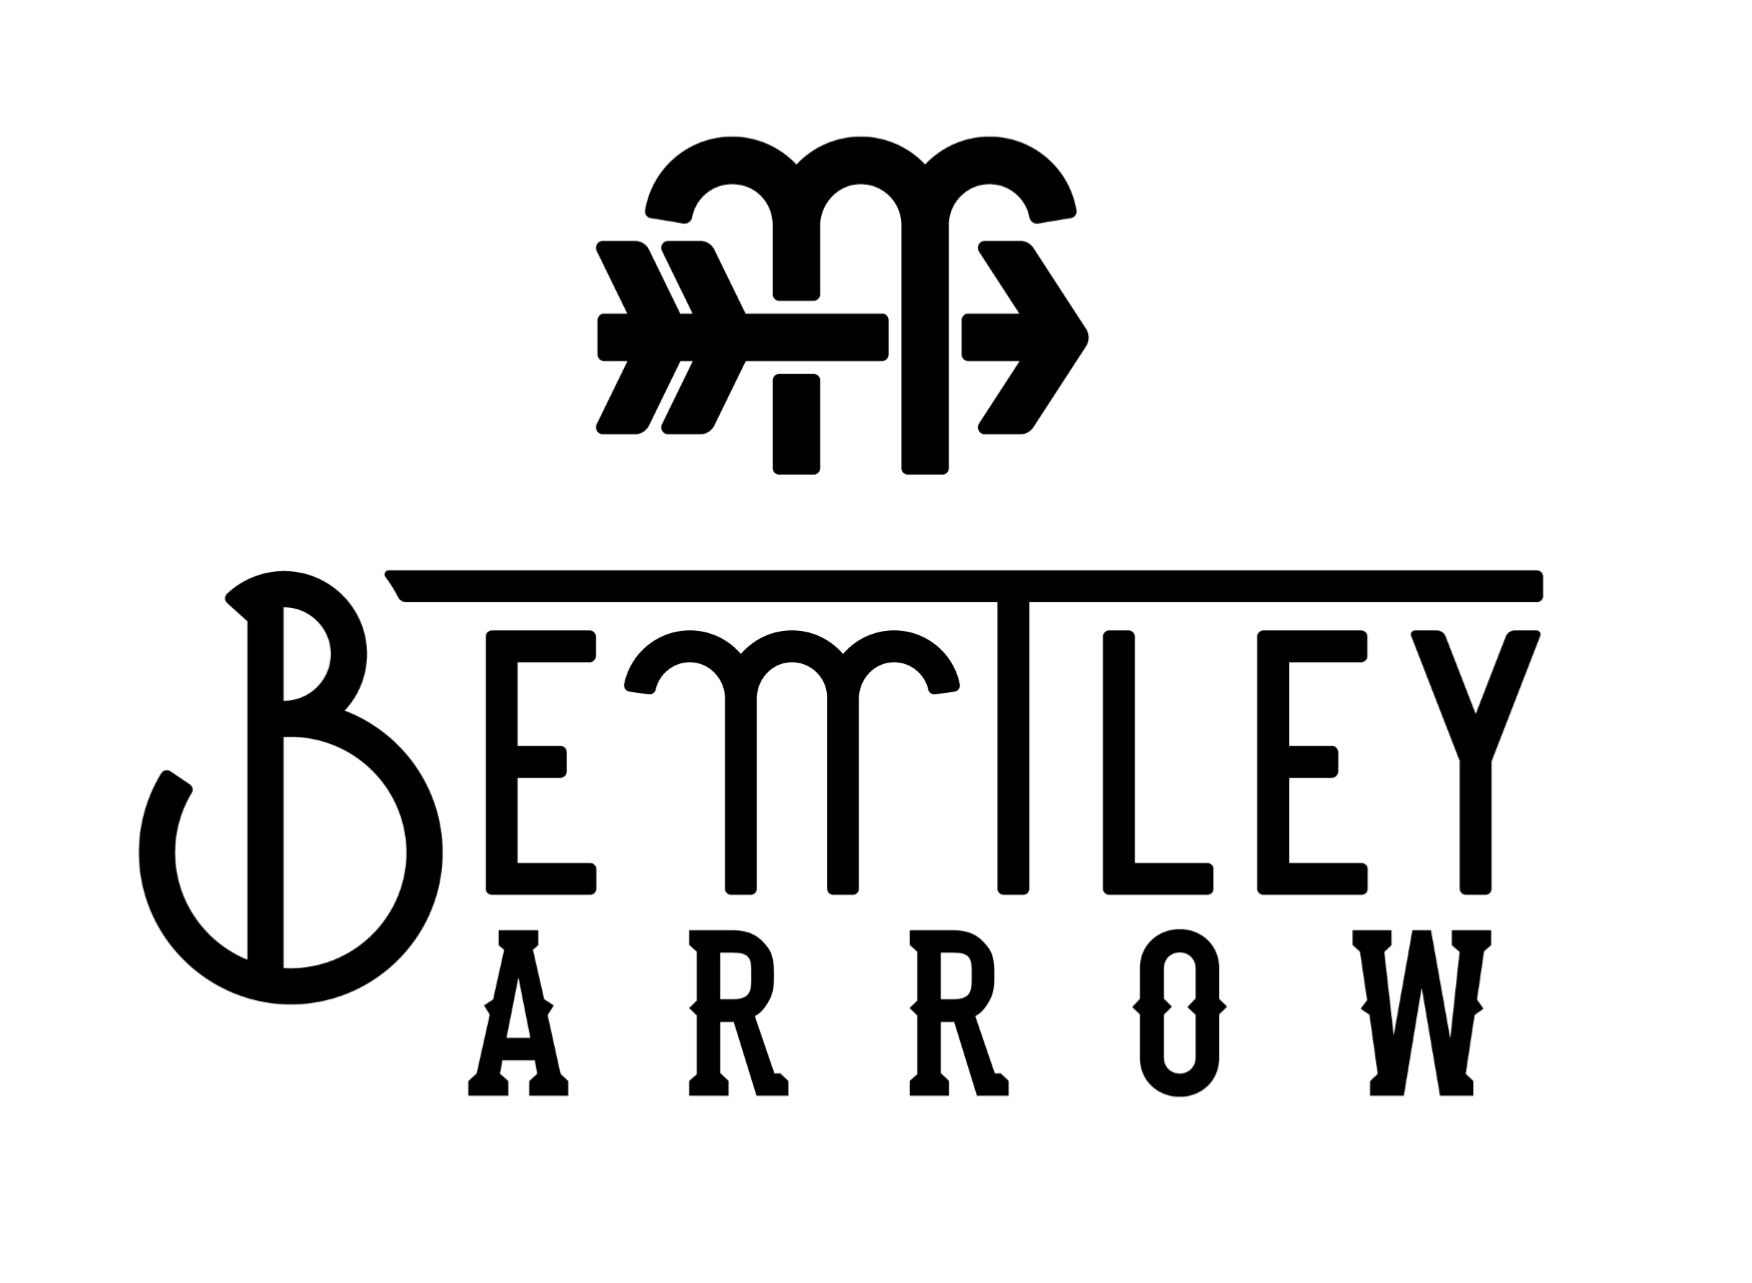 bently arrow.JPG